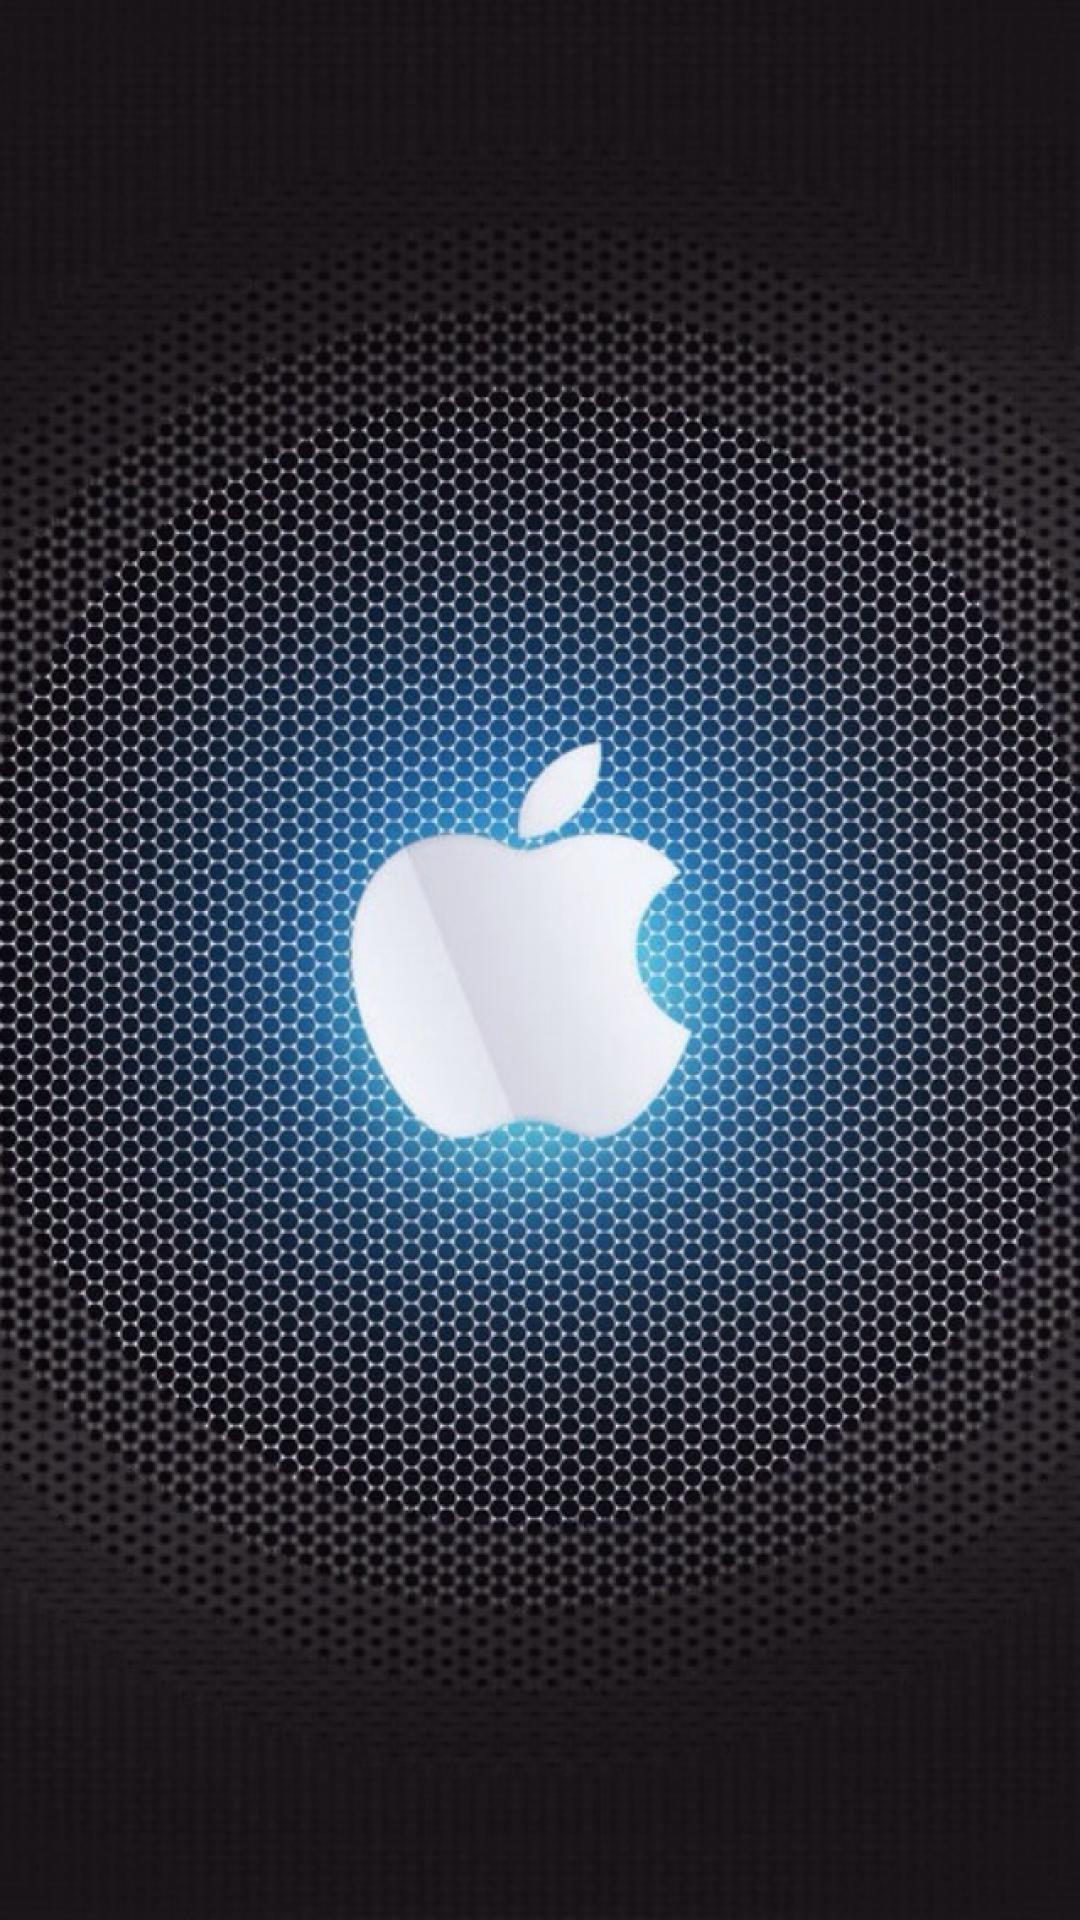 Apple Wallpaper Iphone Hd 6 1978841 Hd Wallpaper Backgrounds Download